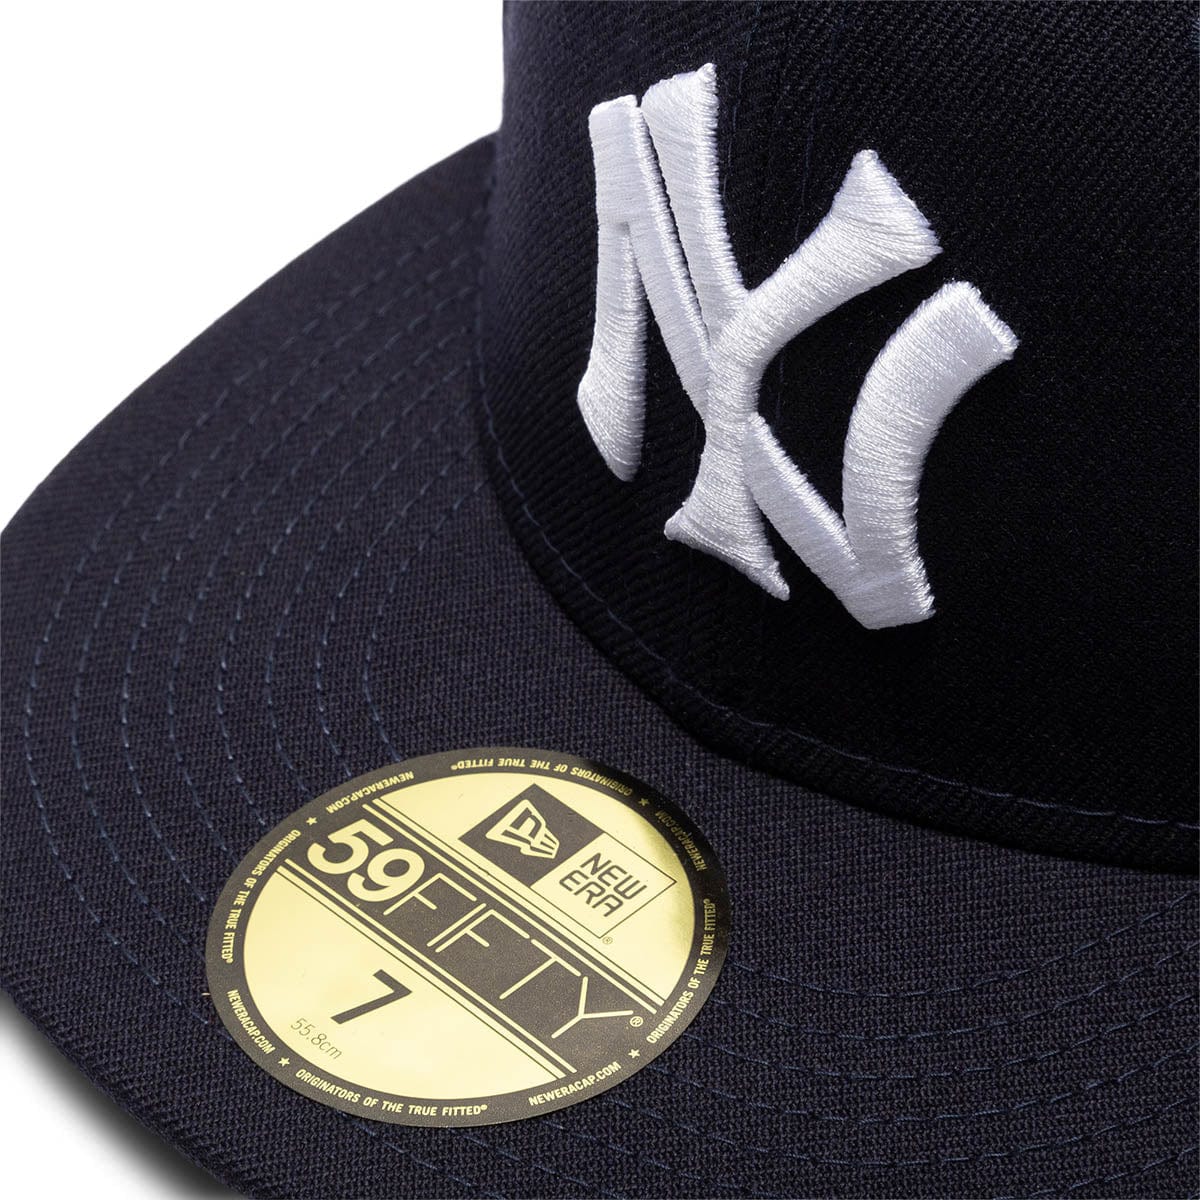 New Era Harvest 5950 17202 New York Yankees Hat - Brown/Navy